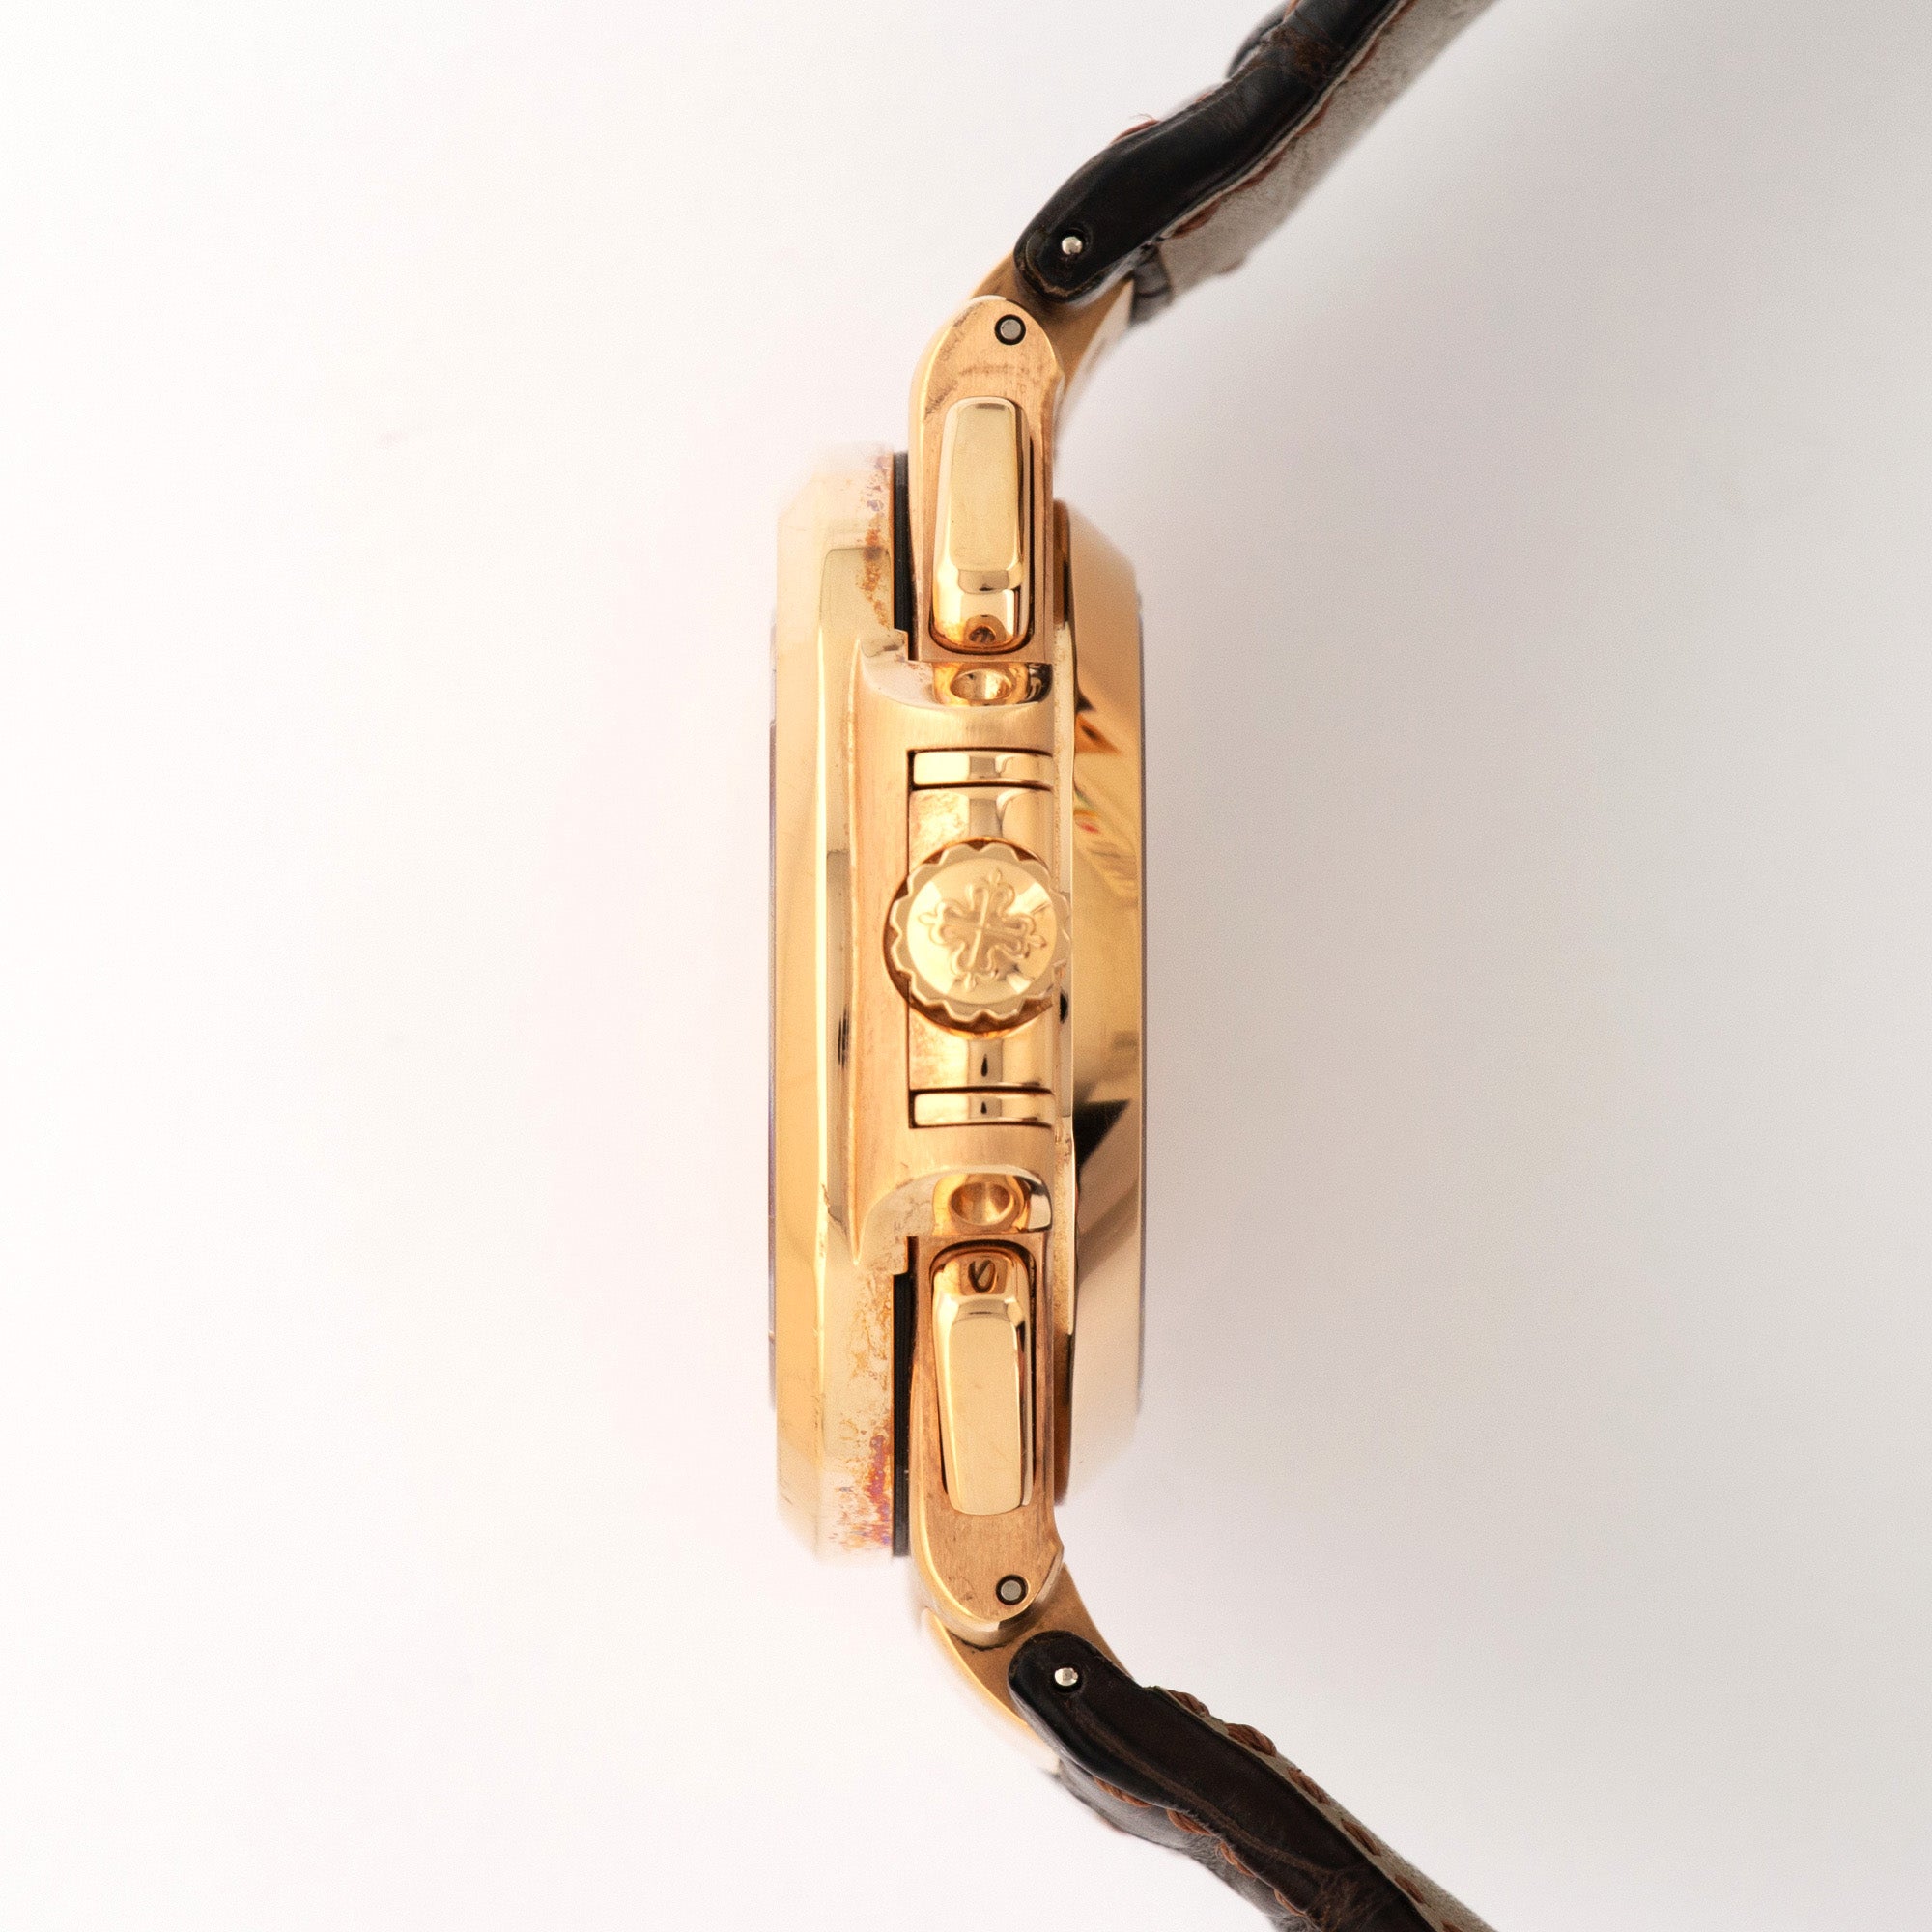 Patek Philippe - Patek Philippe Rose Gold Nautilus Chronograph Watch Ref. 5980 - The Keystone Watches